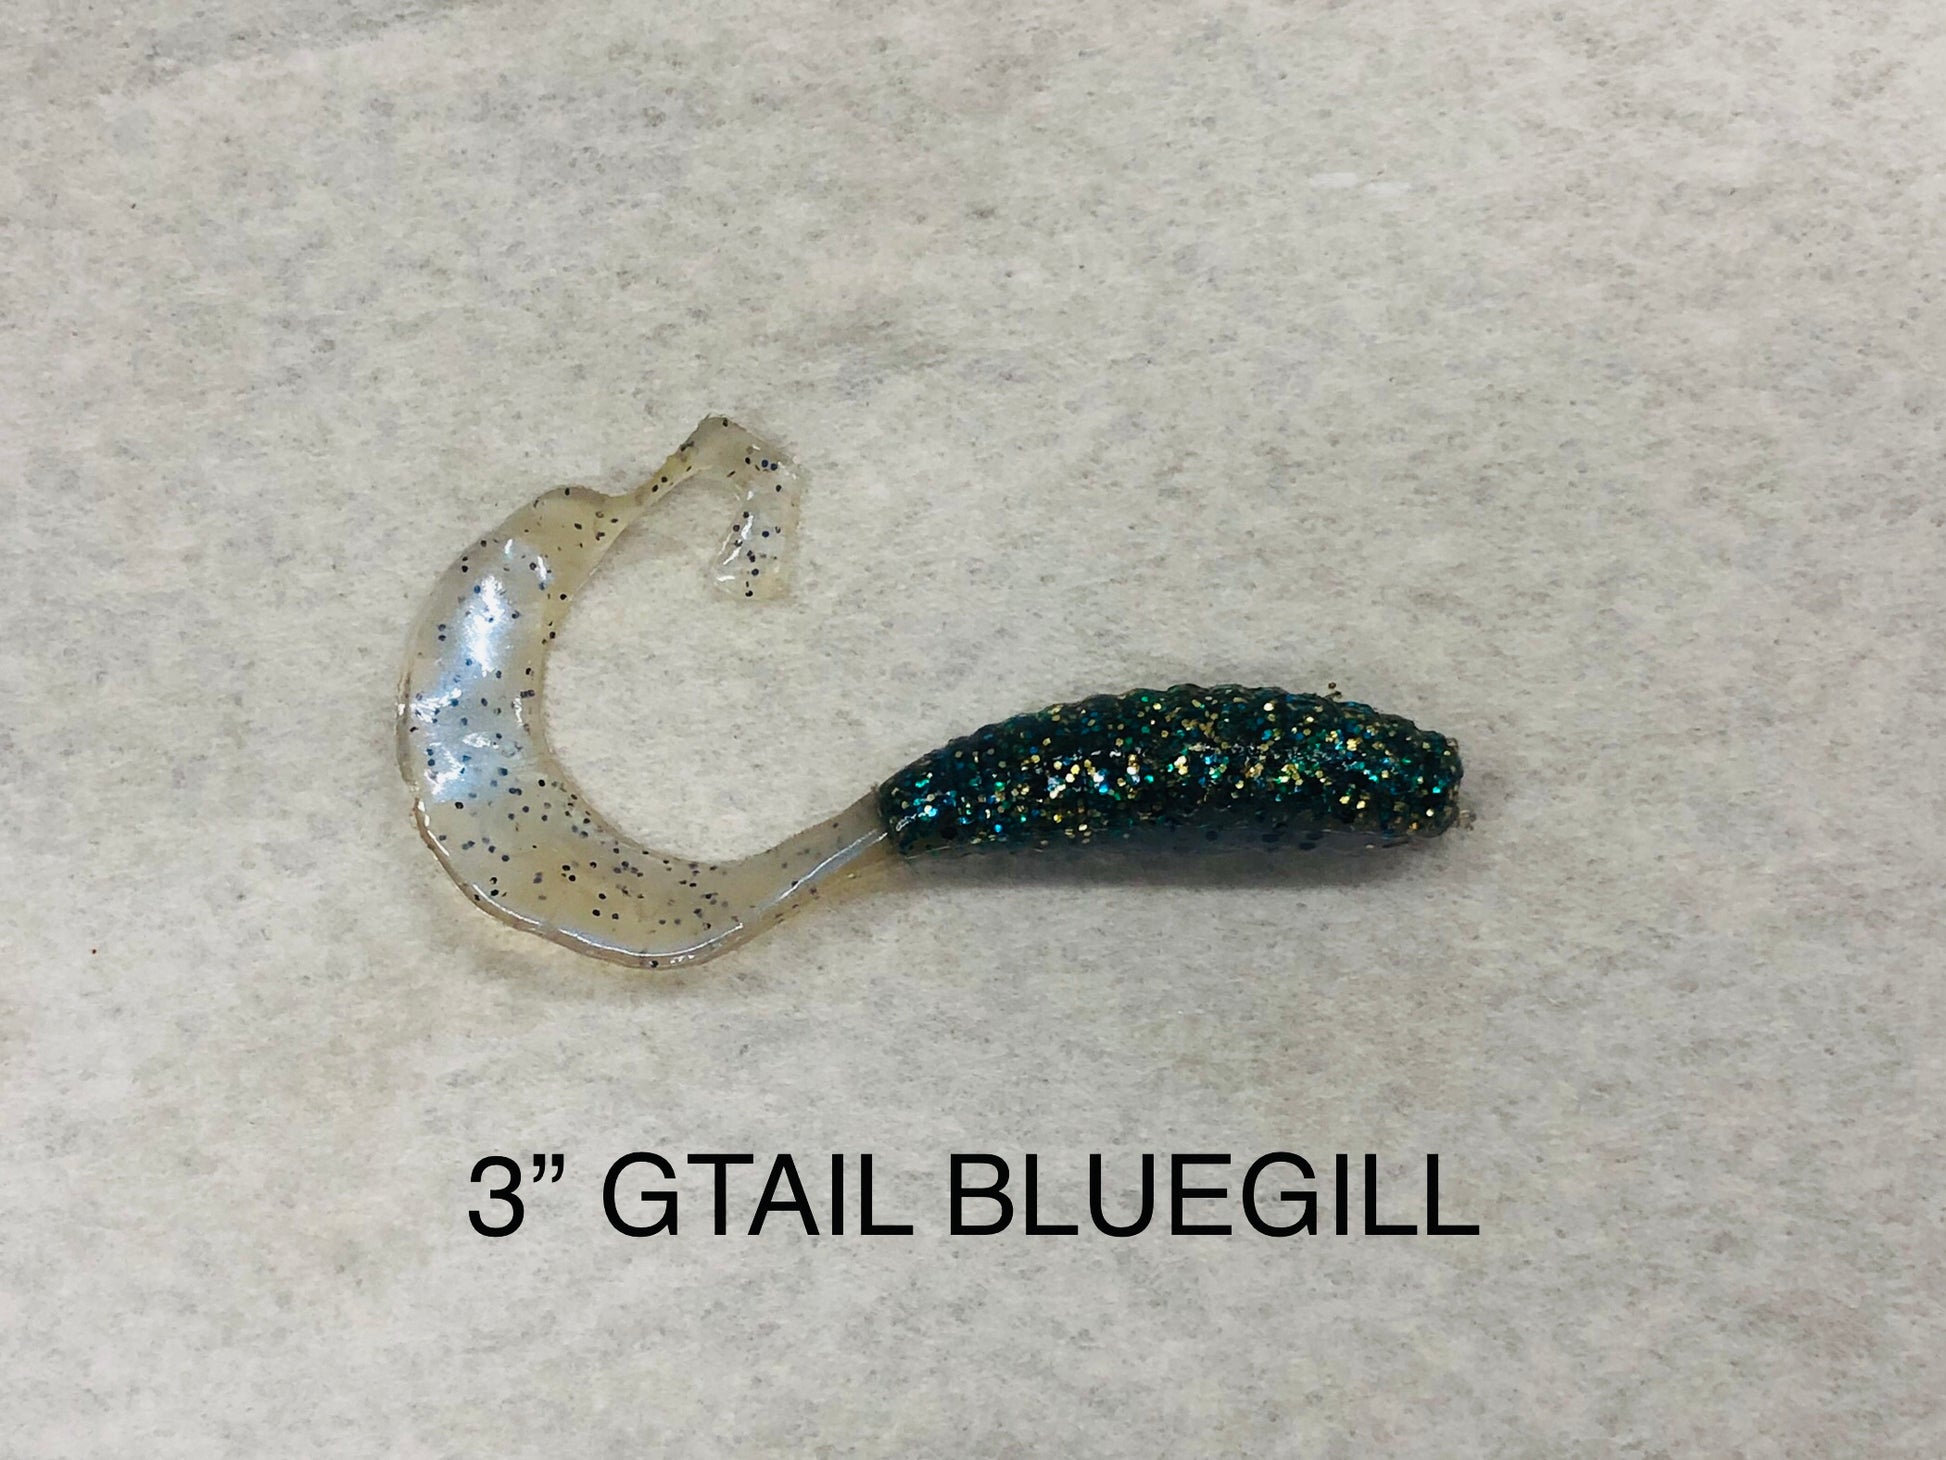 gitzit-g-tail-grub-bluegill-3in-19220